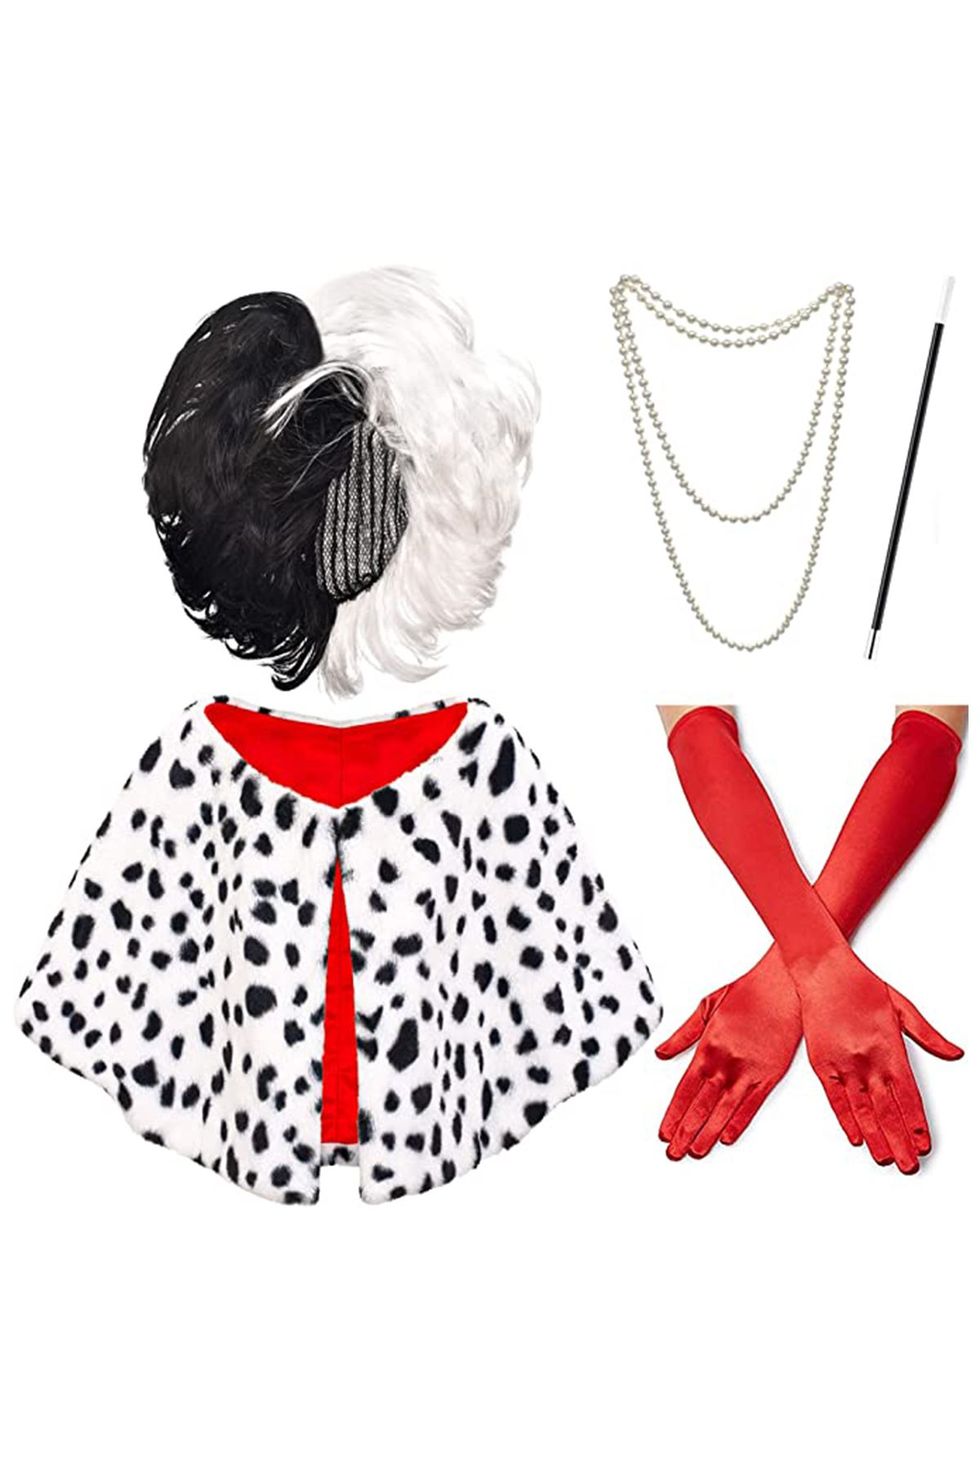 Dress Like Emma Stone From Cruella  Cruella deville halloween costume,  Halloween fancy dress, Cruella costume diy